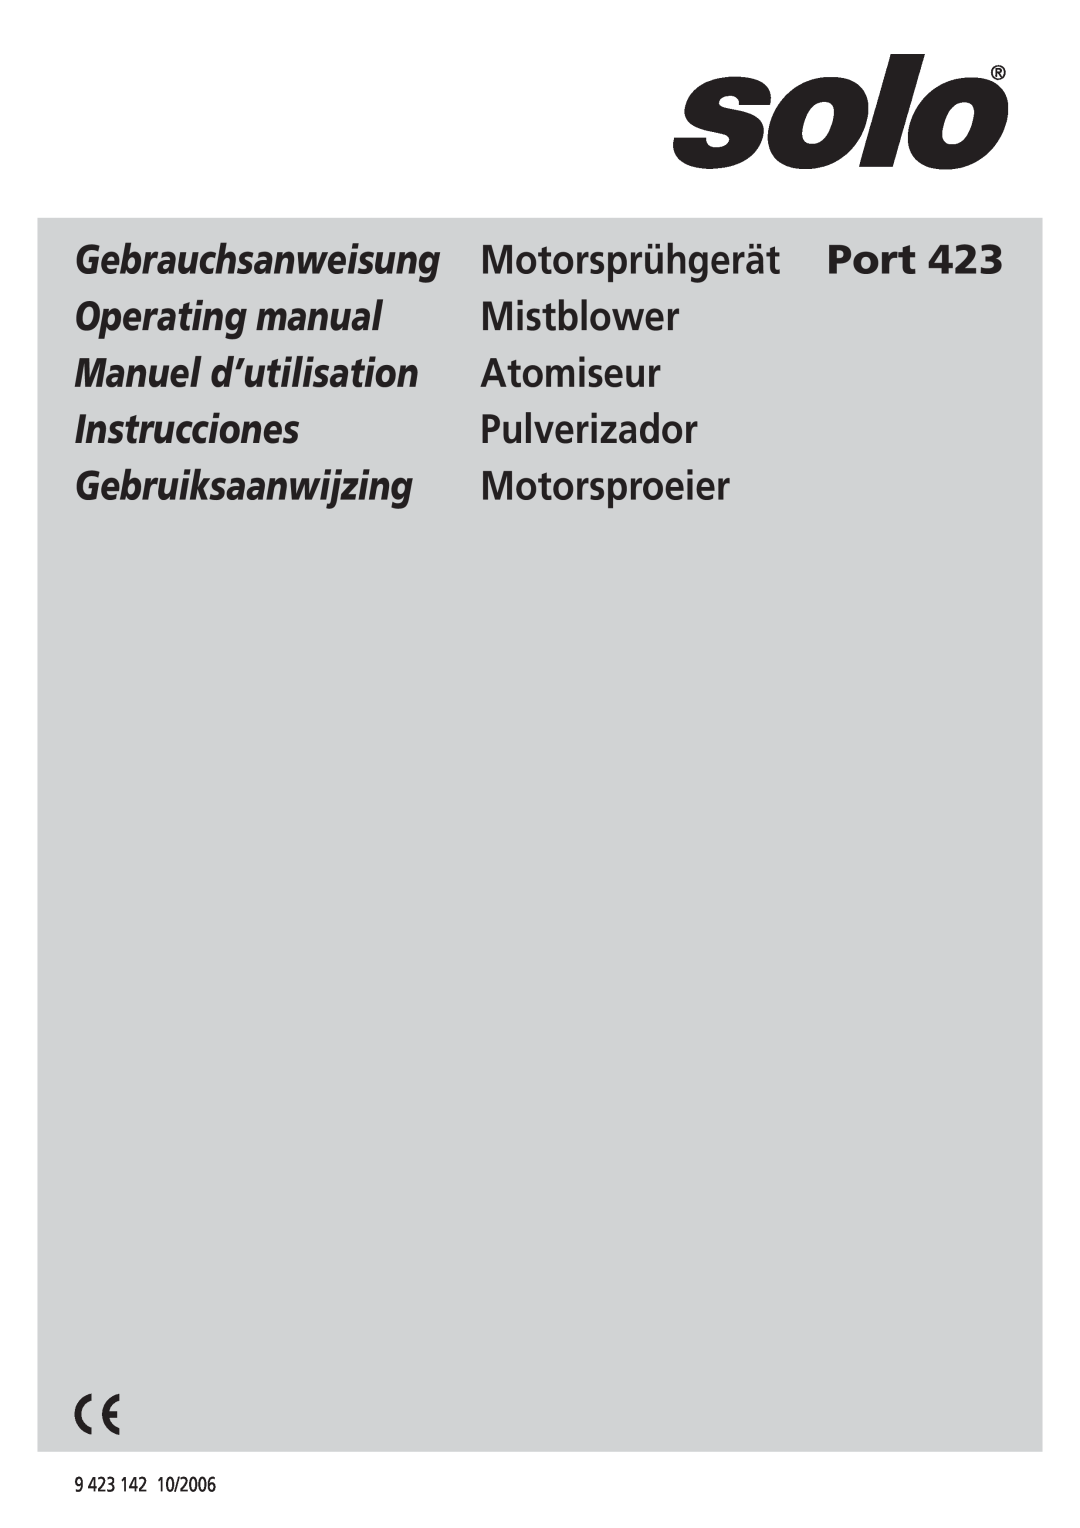 Solo USA Port 423 manual Motorsprühgerät Port, Operating manual, Mistblower, Manuel d’utilisation, Atomiseur, Pulverizador 